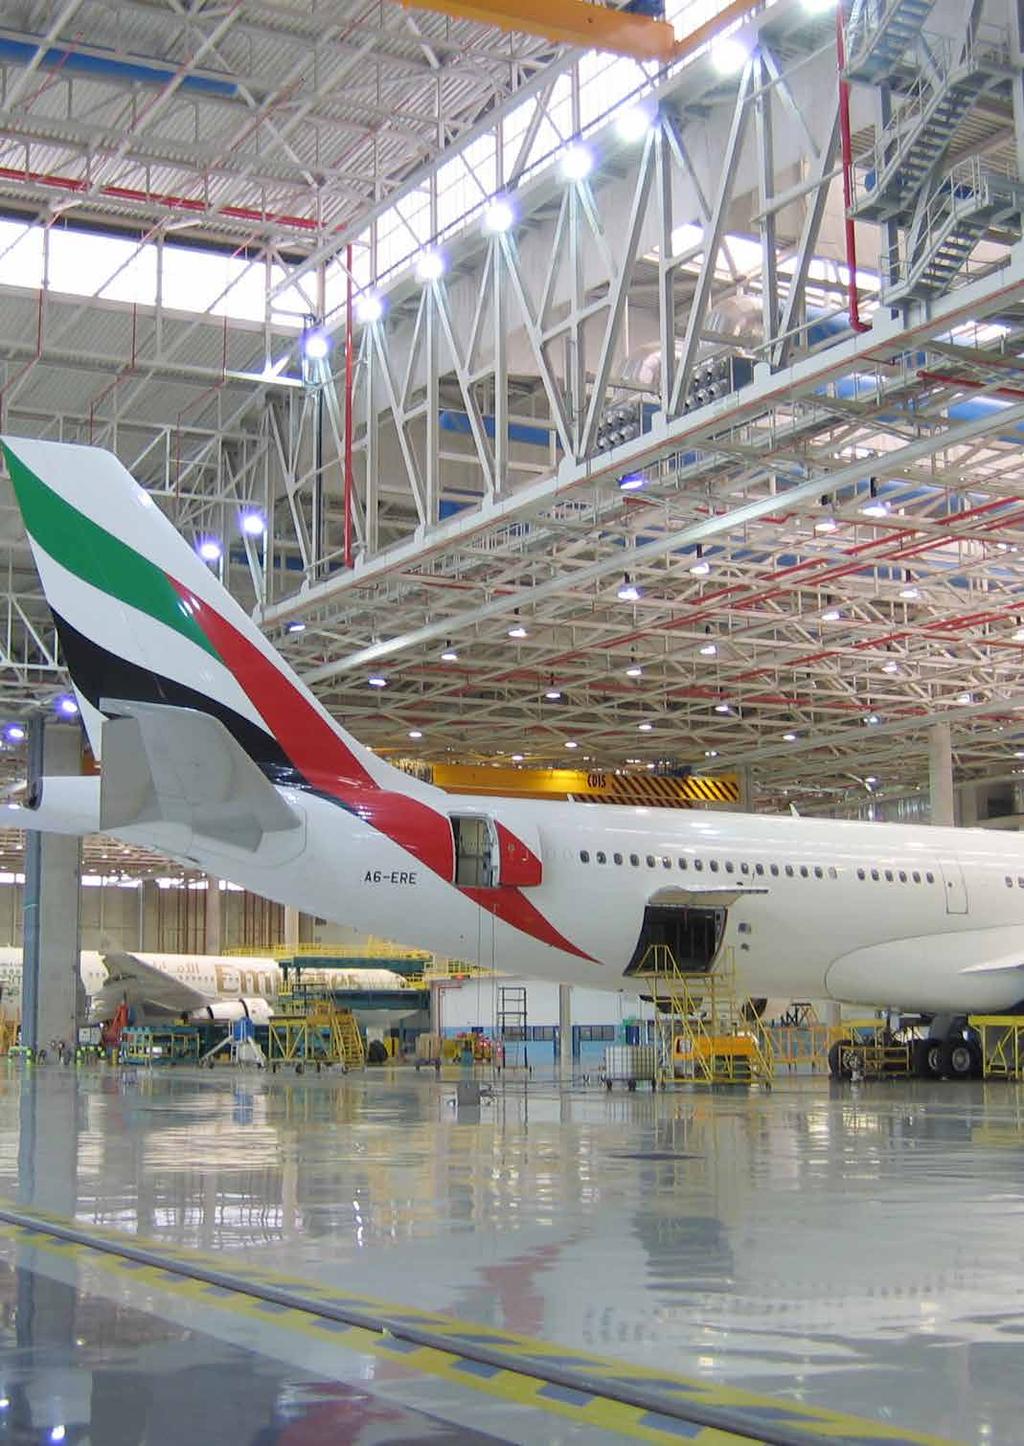 Emirates maintenance facility at Dubai International